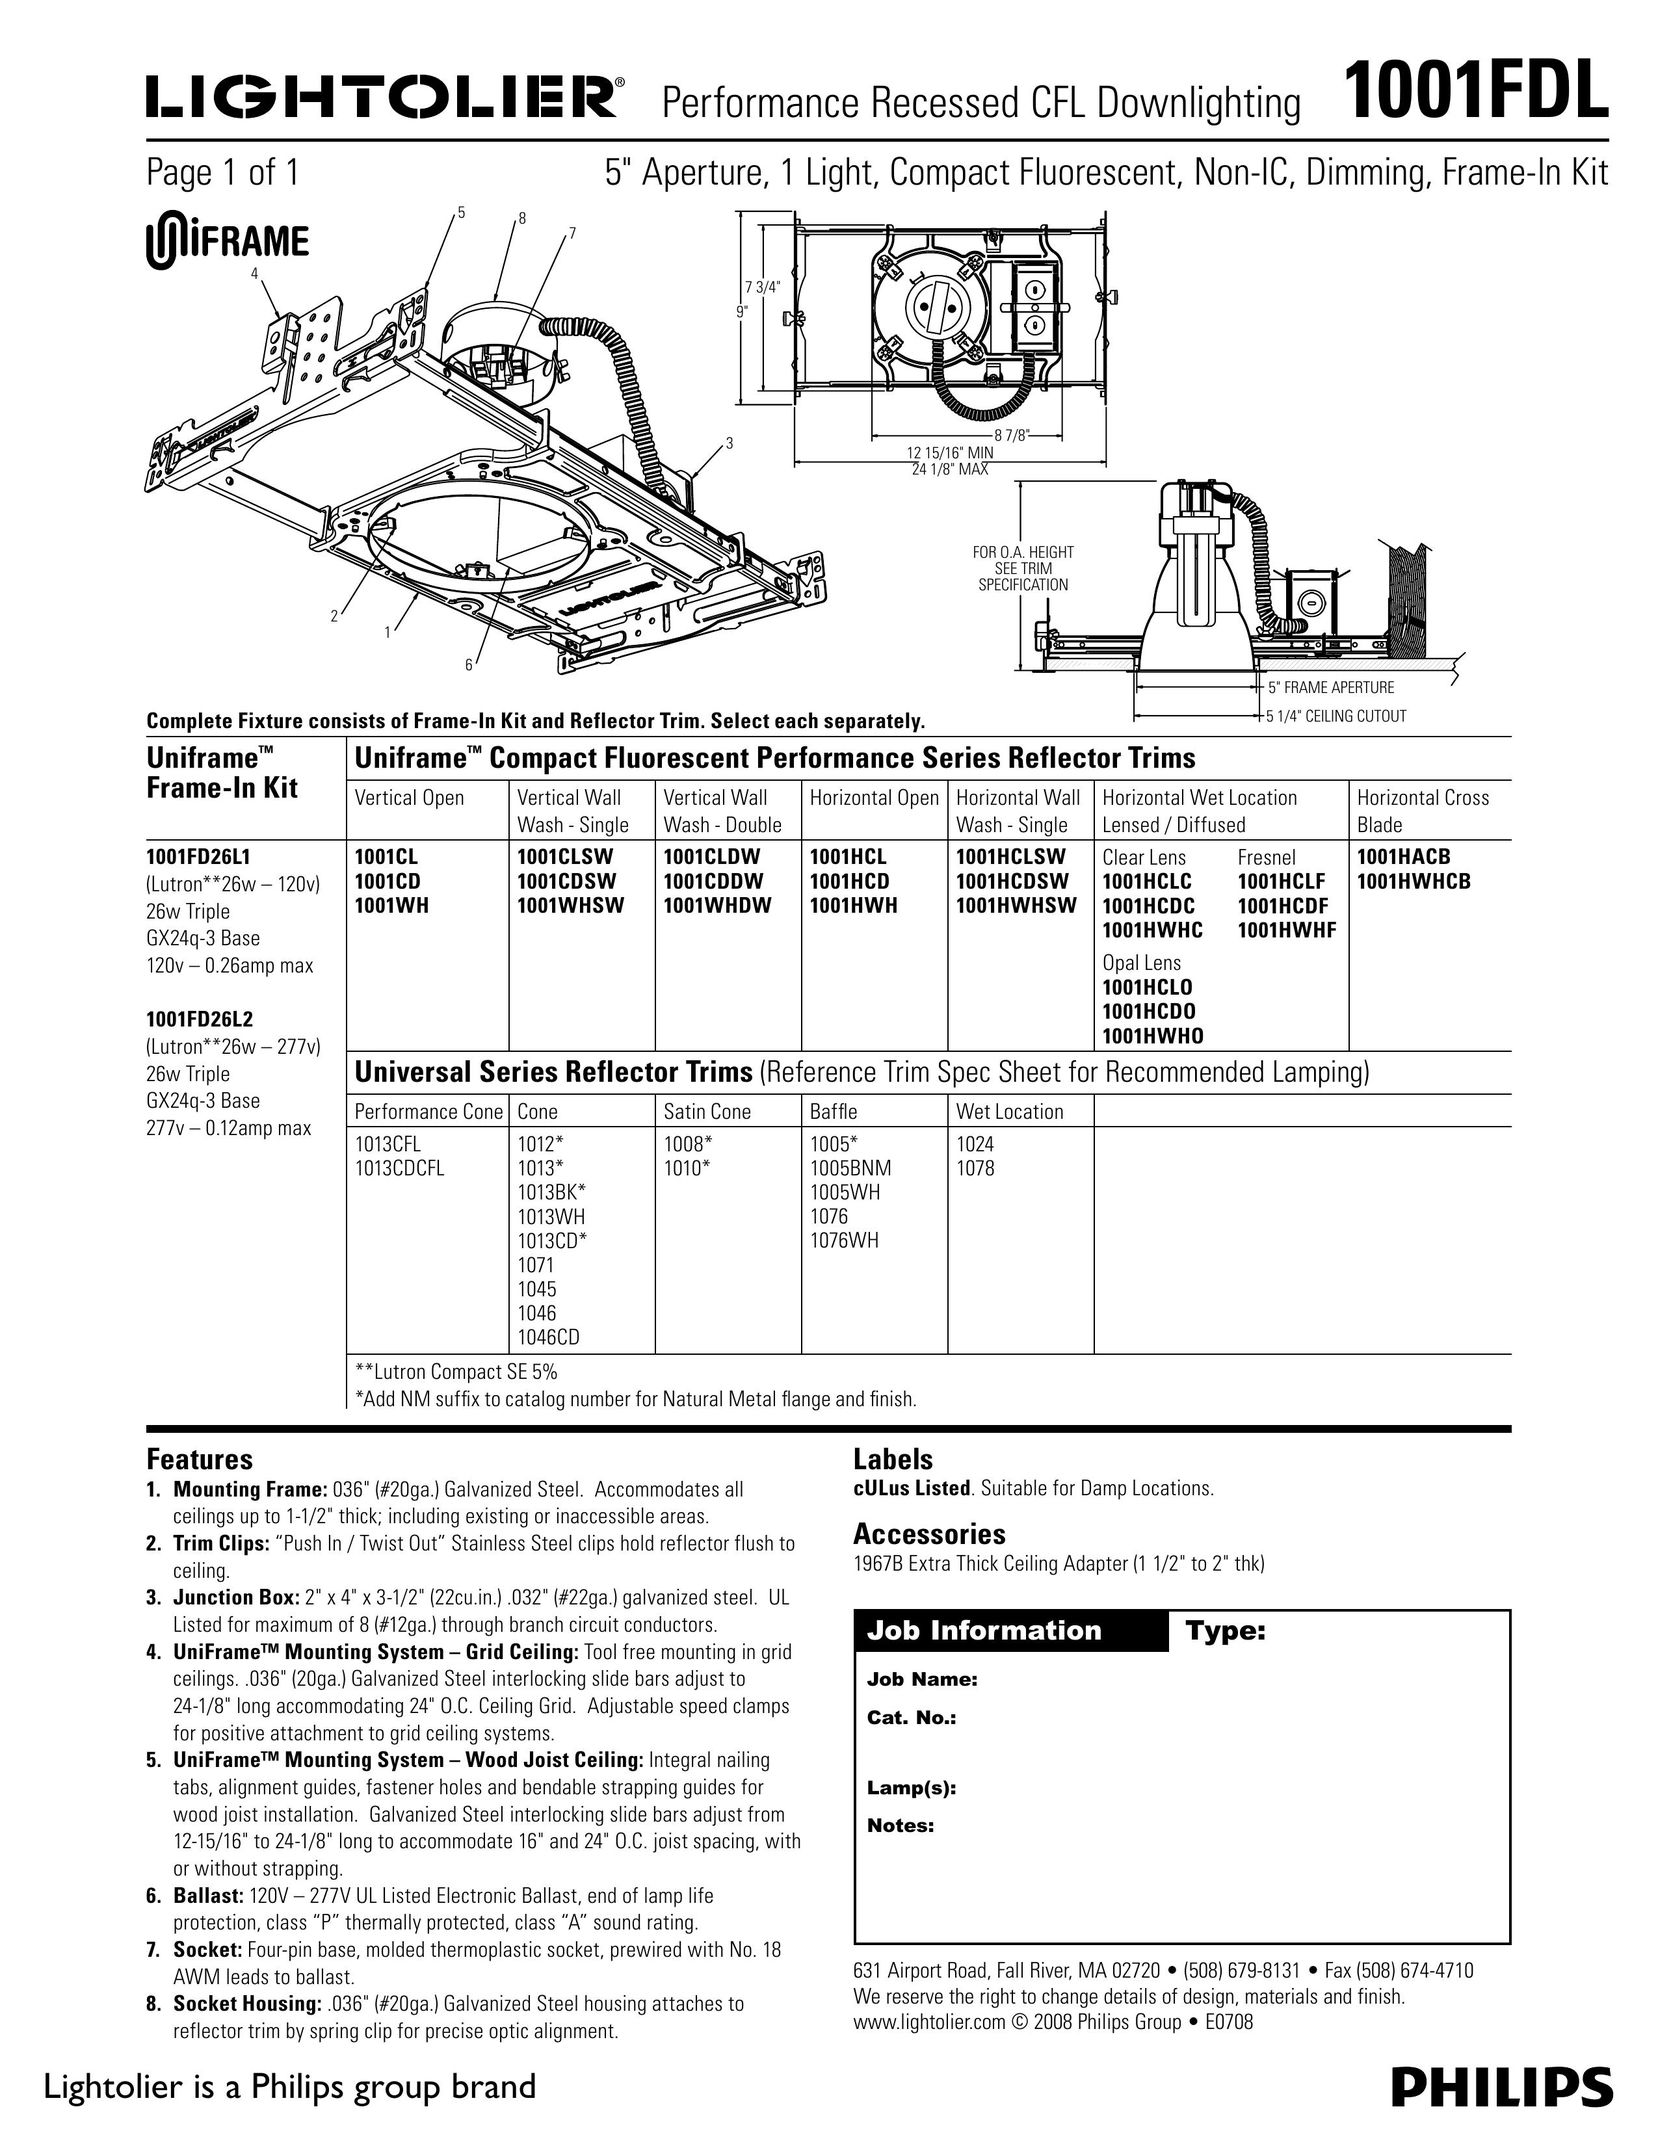 Lightolier 1001FDL Indoor Furnishings User Manual